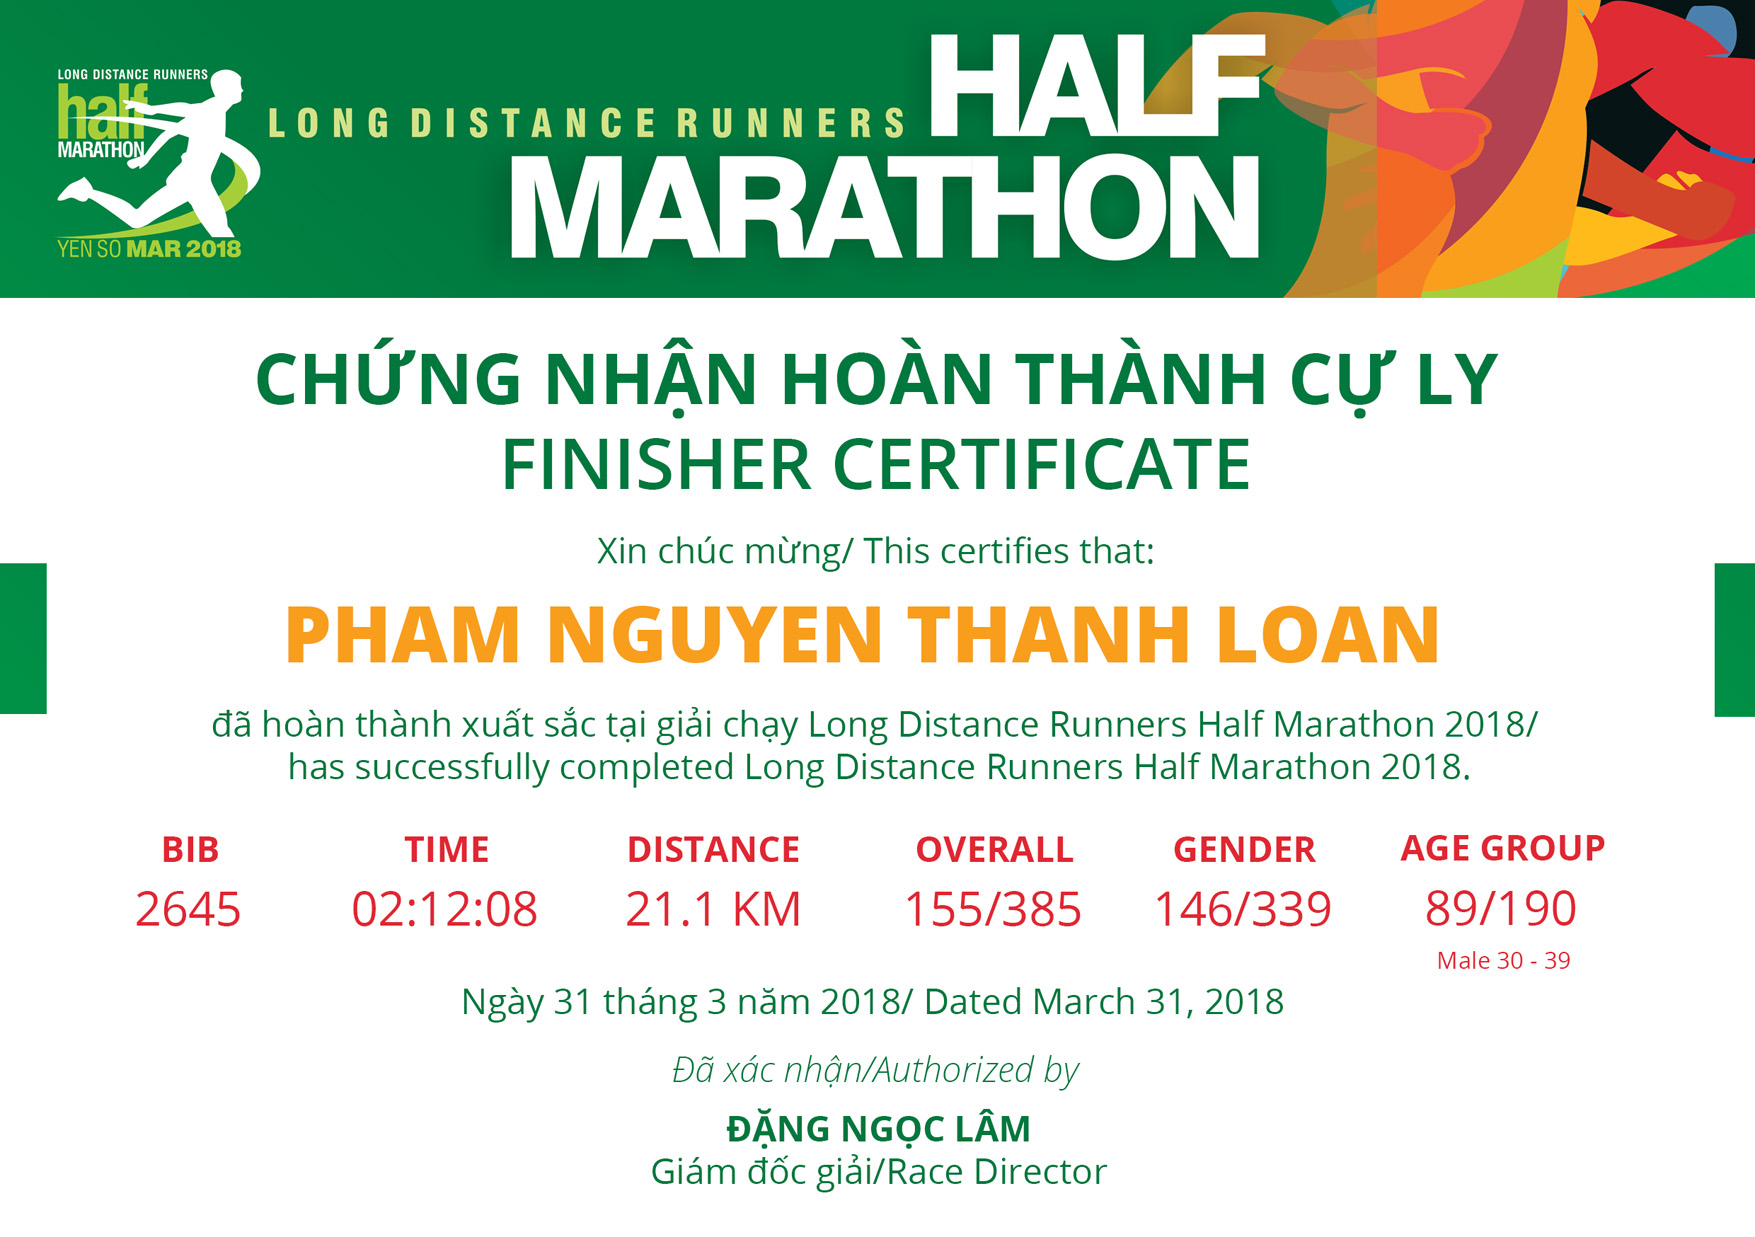 2645 - Pham Nguyen Thanh Loan